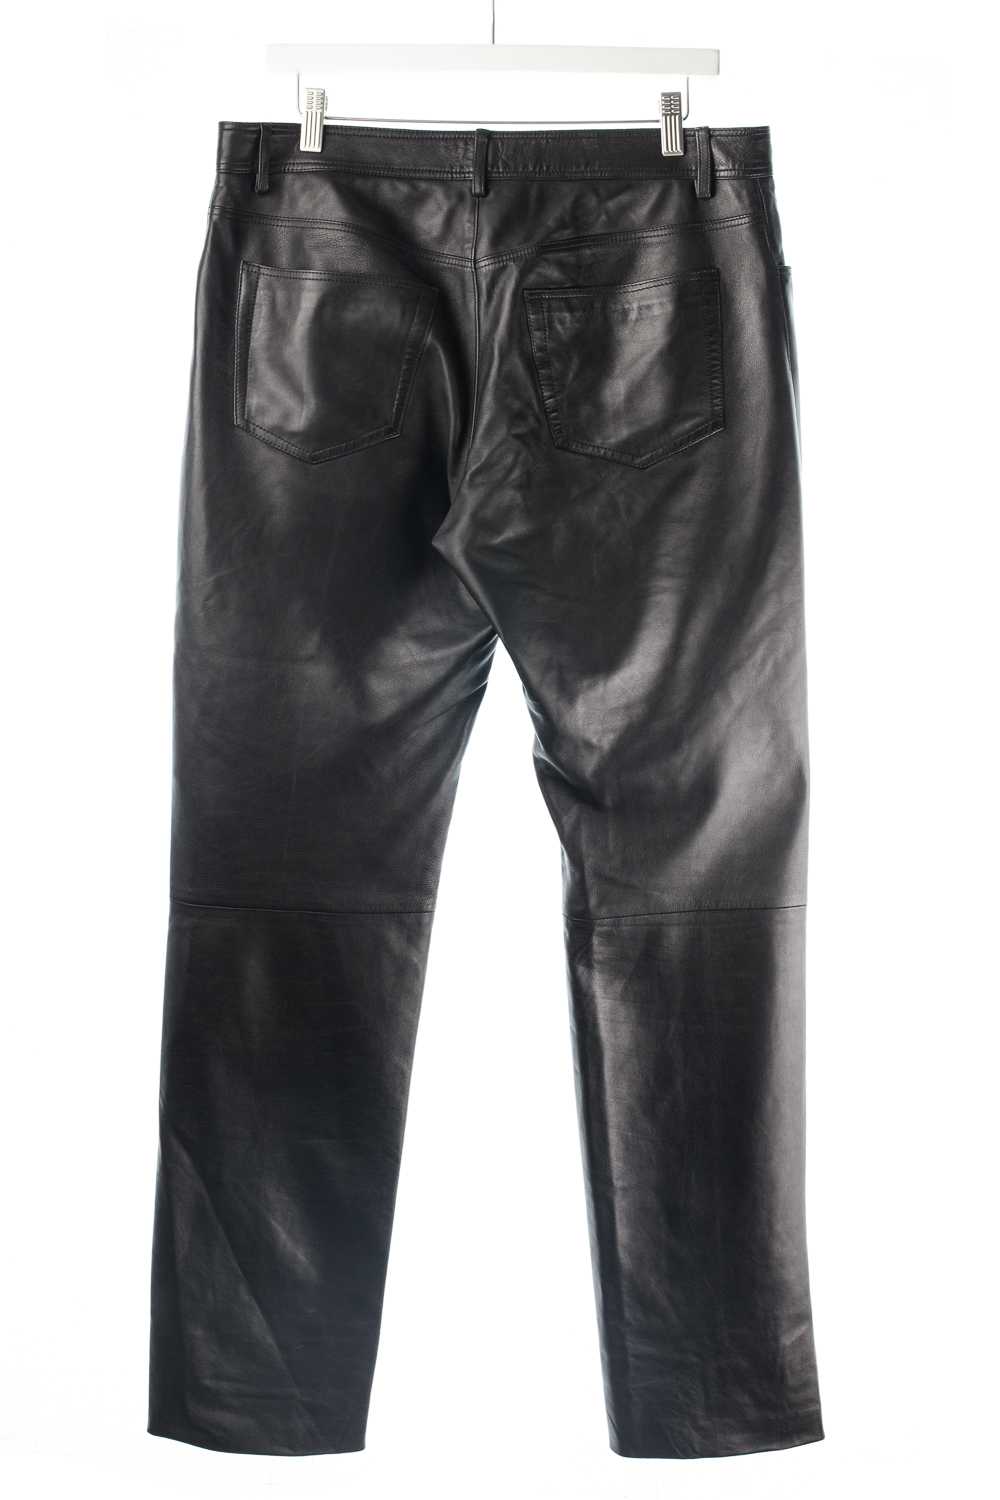 FW03 Calf Leather Pants - image 2